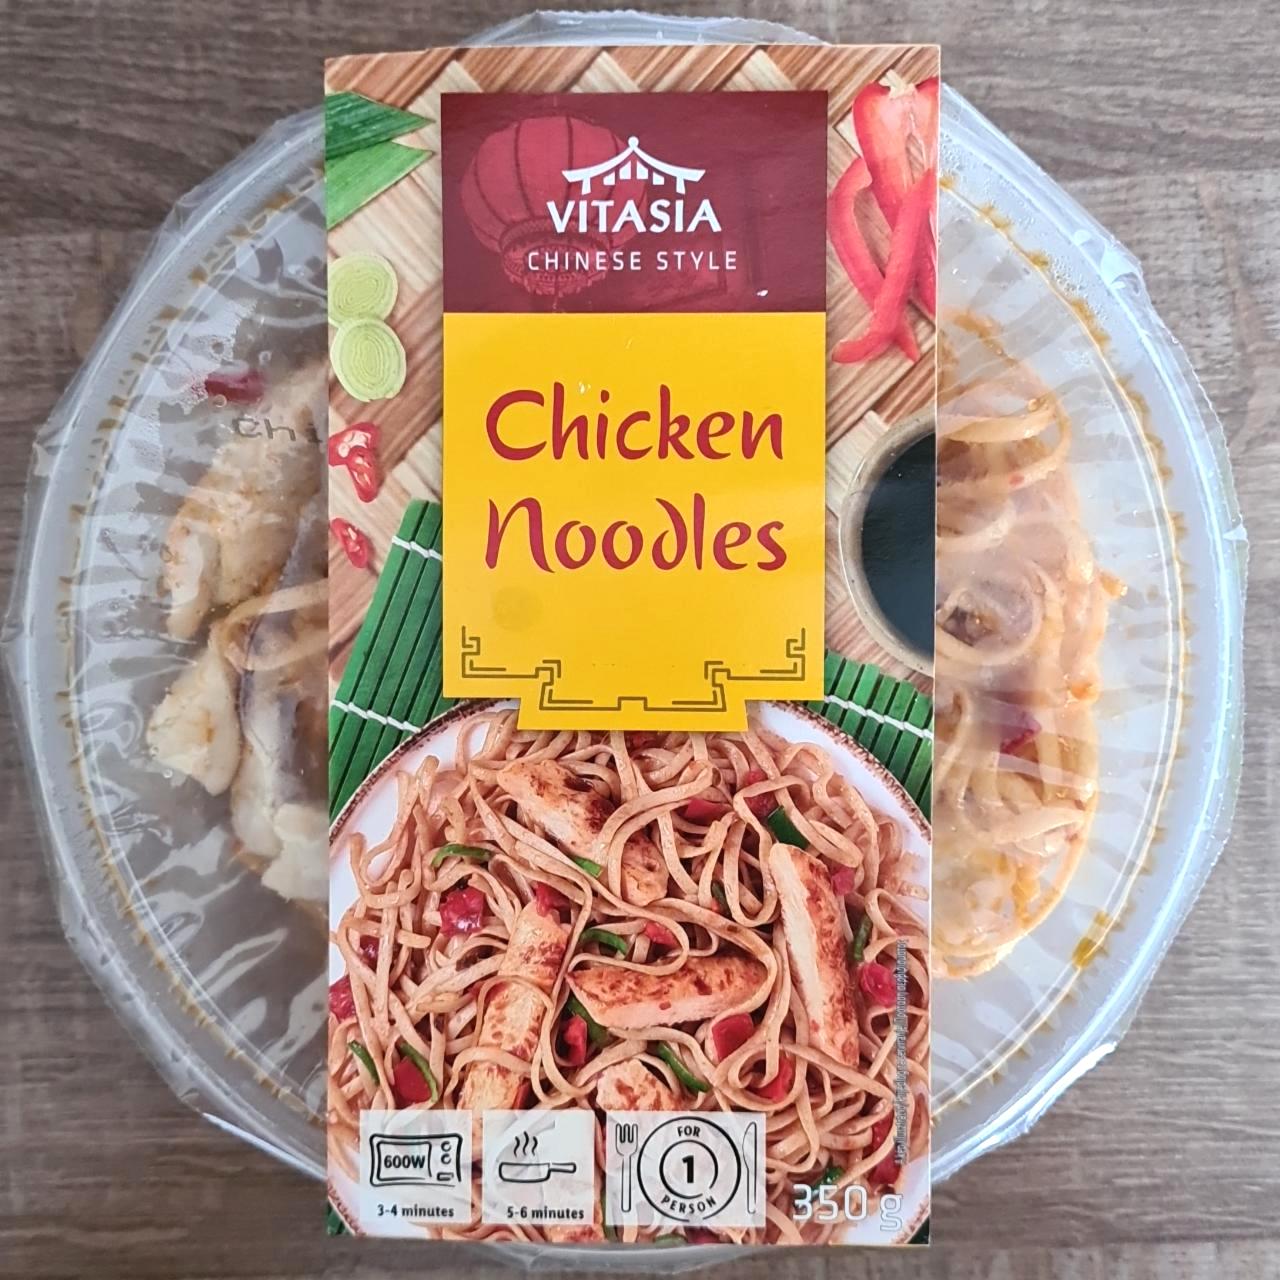 Képek - Chicken Noodles Vitasia